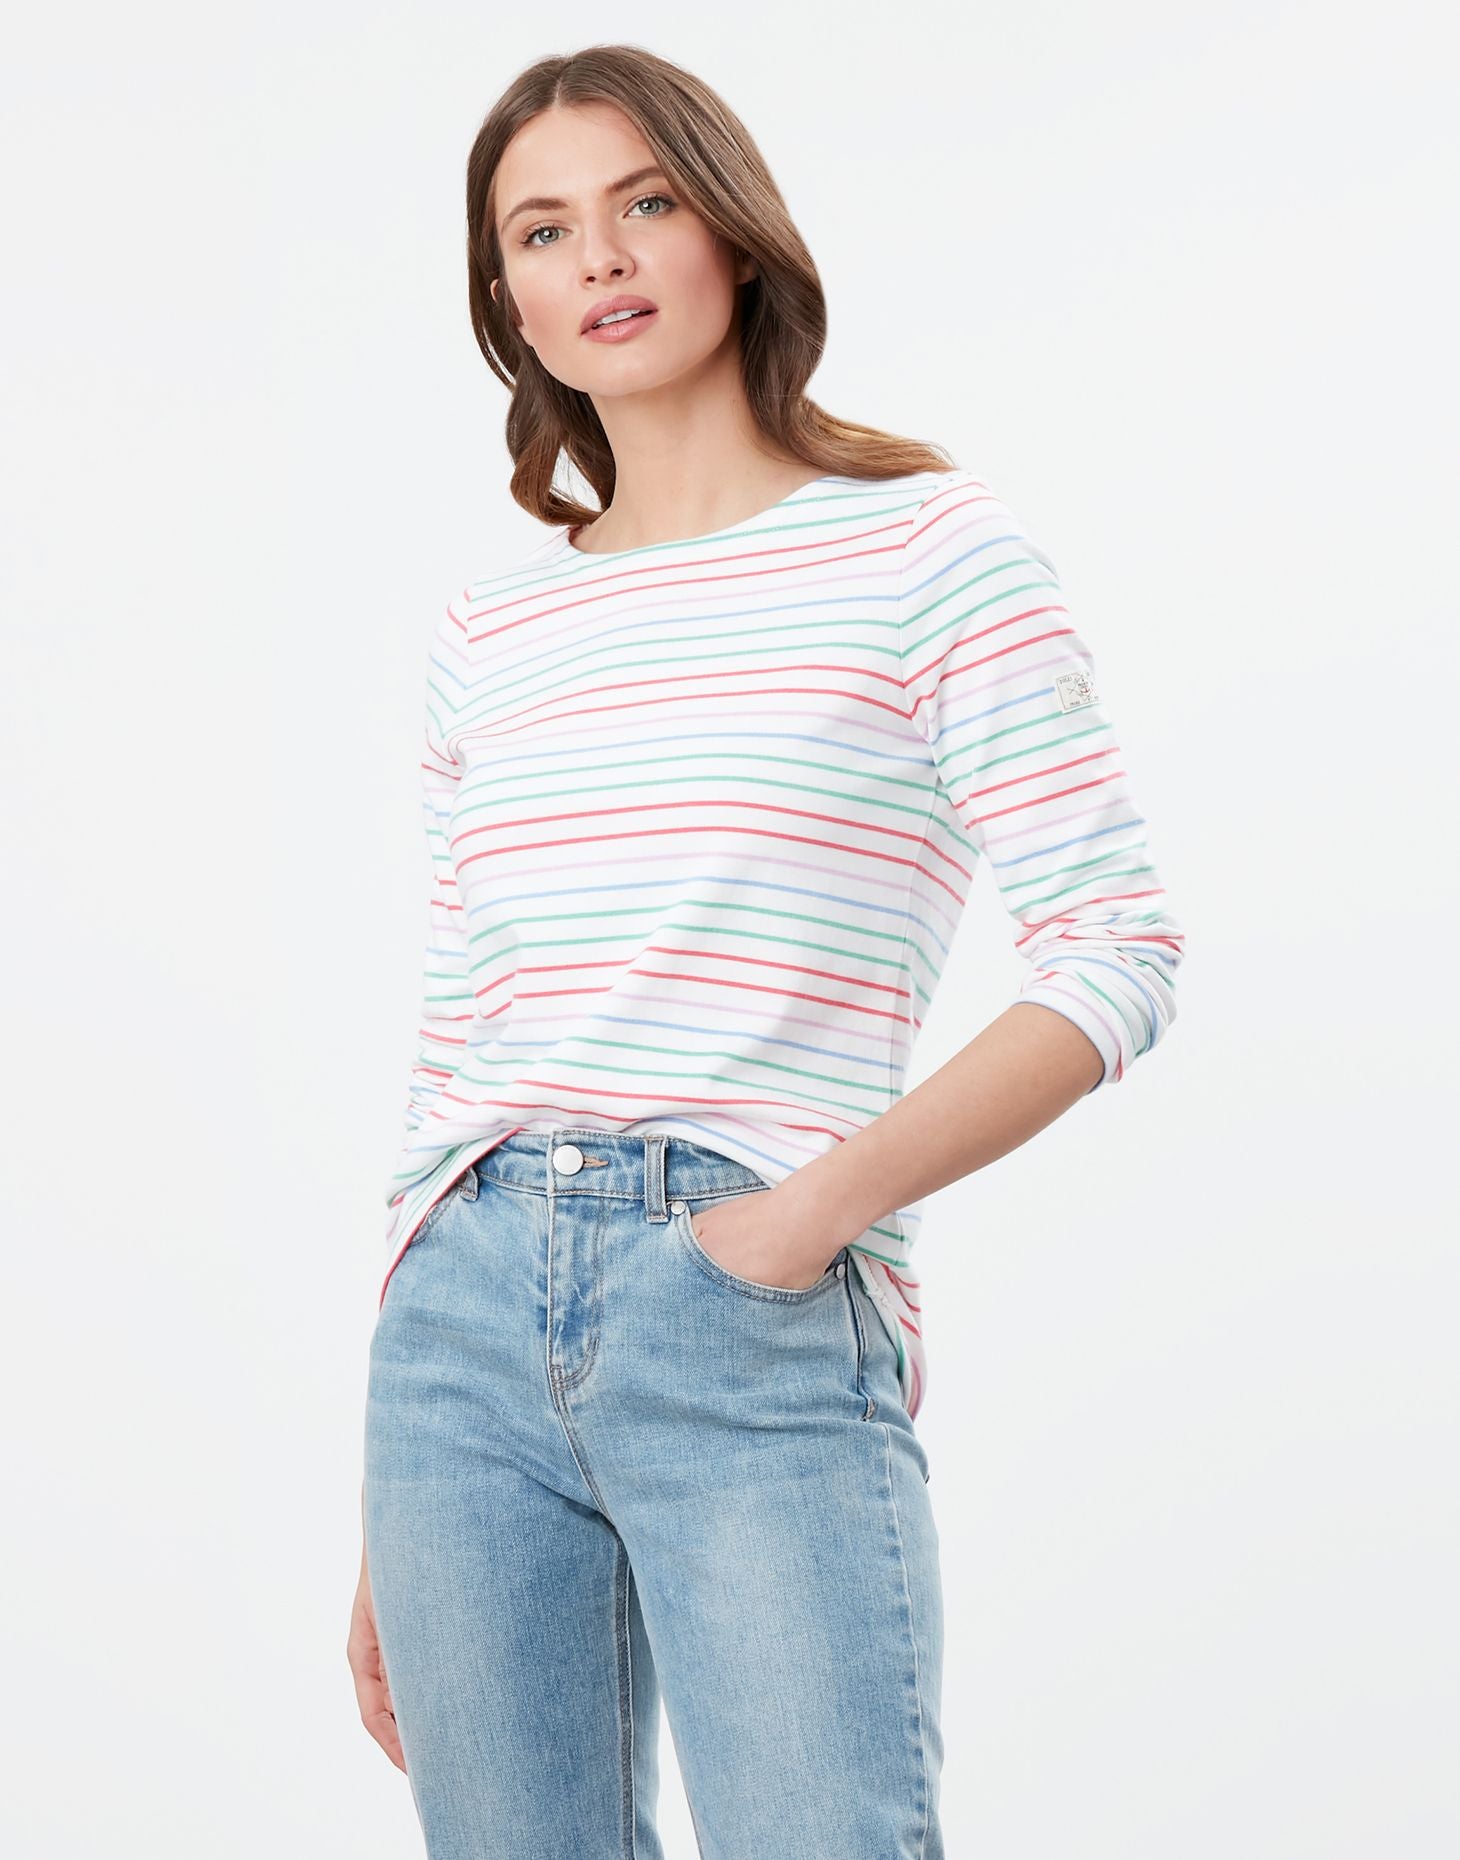 Joules - Women's Harbour Long Sleeve Jersey Top - Cream Multi Stripe